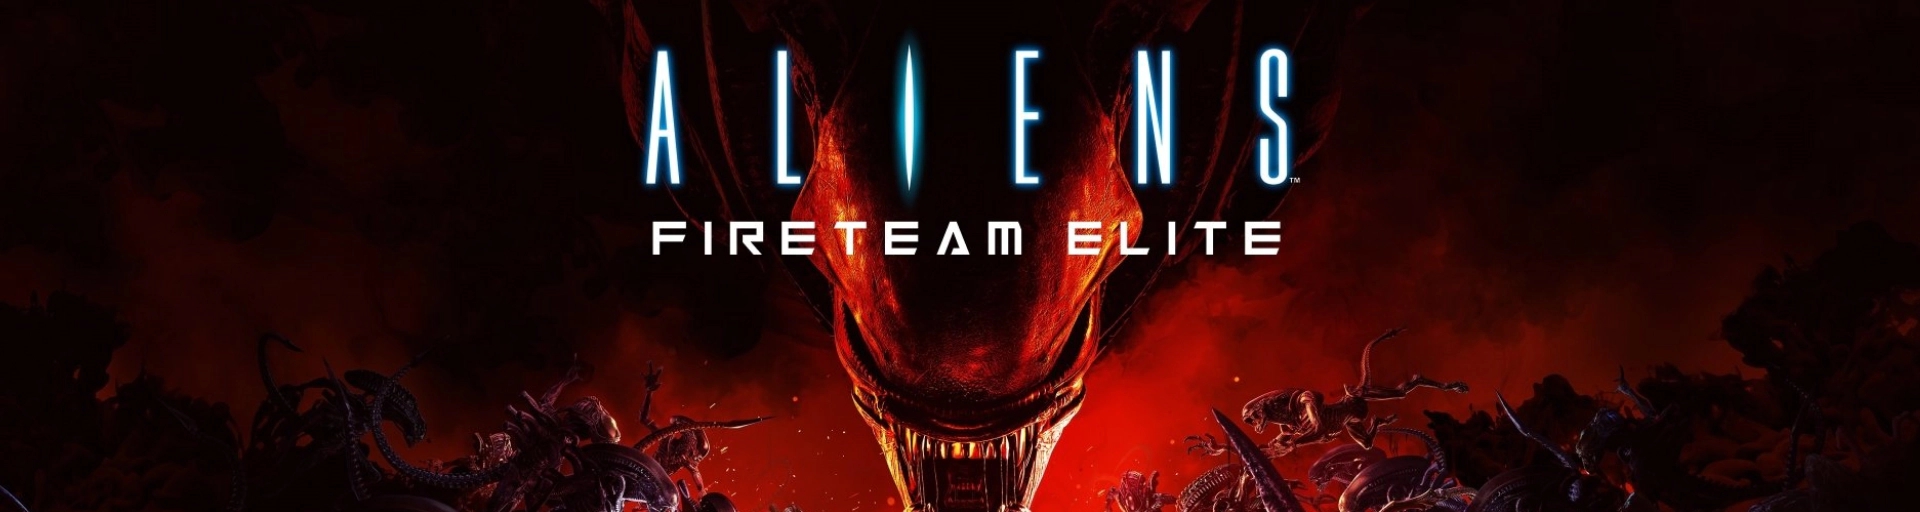 Aliens: Fireteam Elite Showcase Image